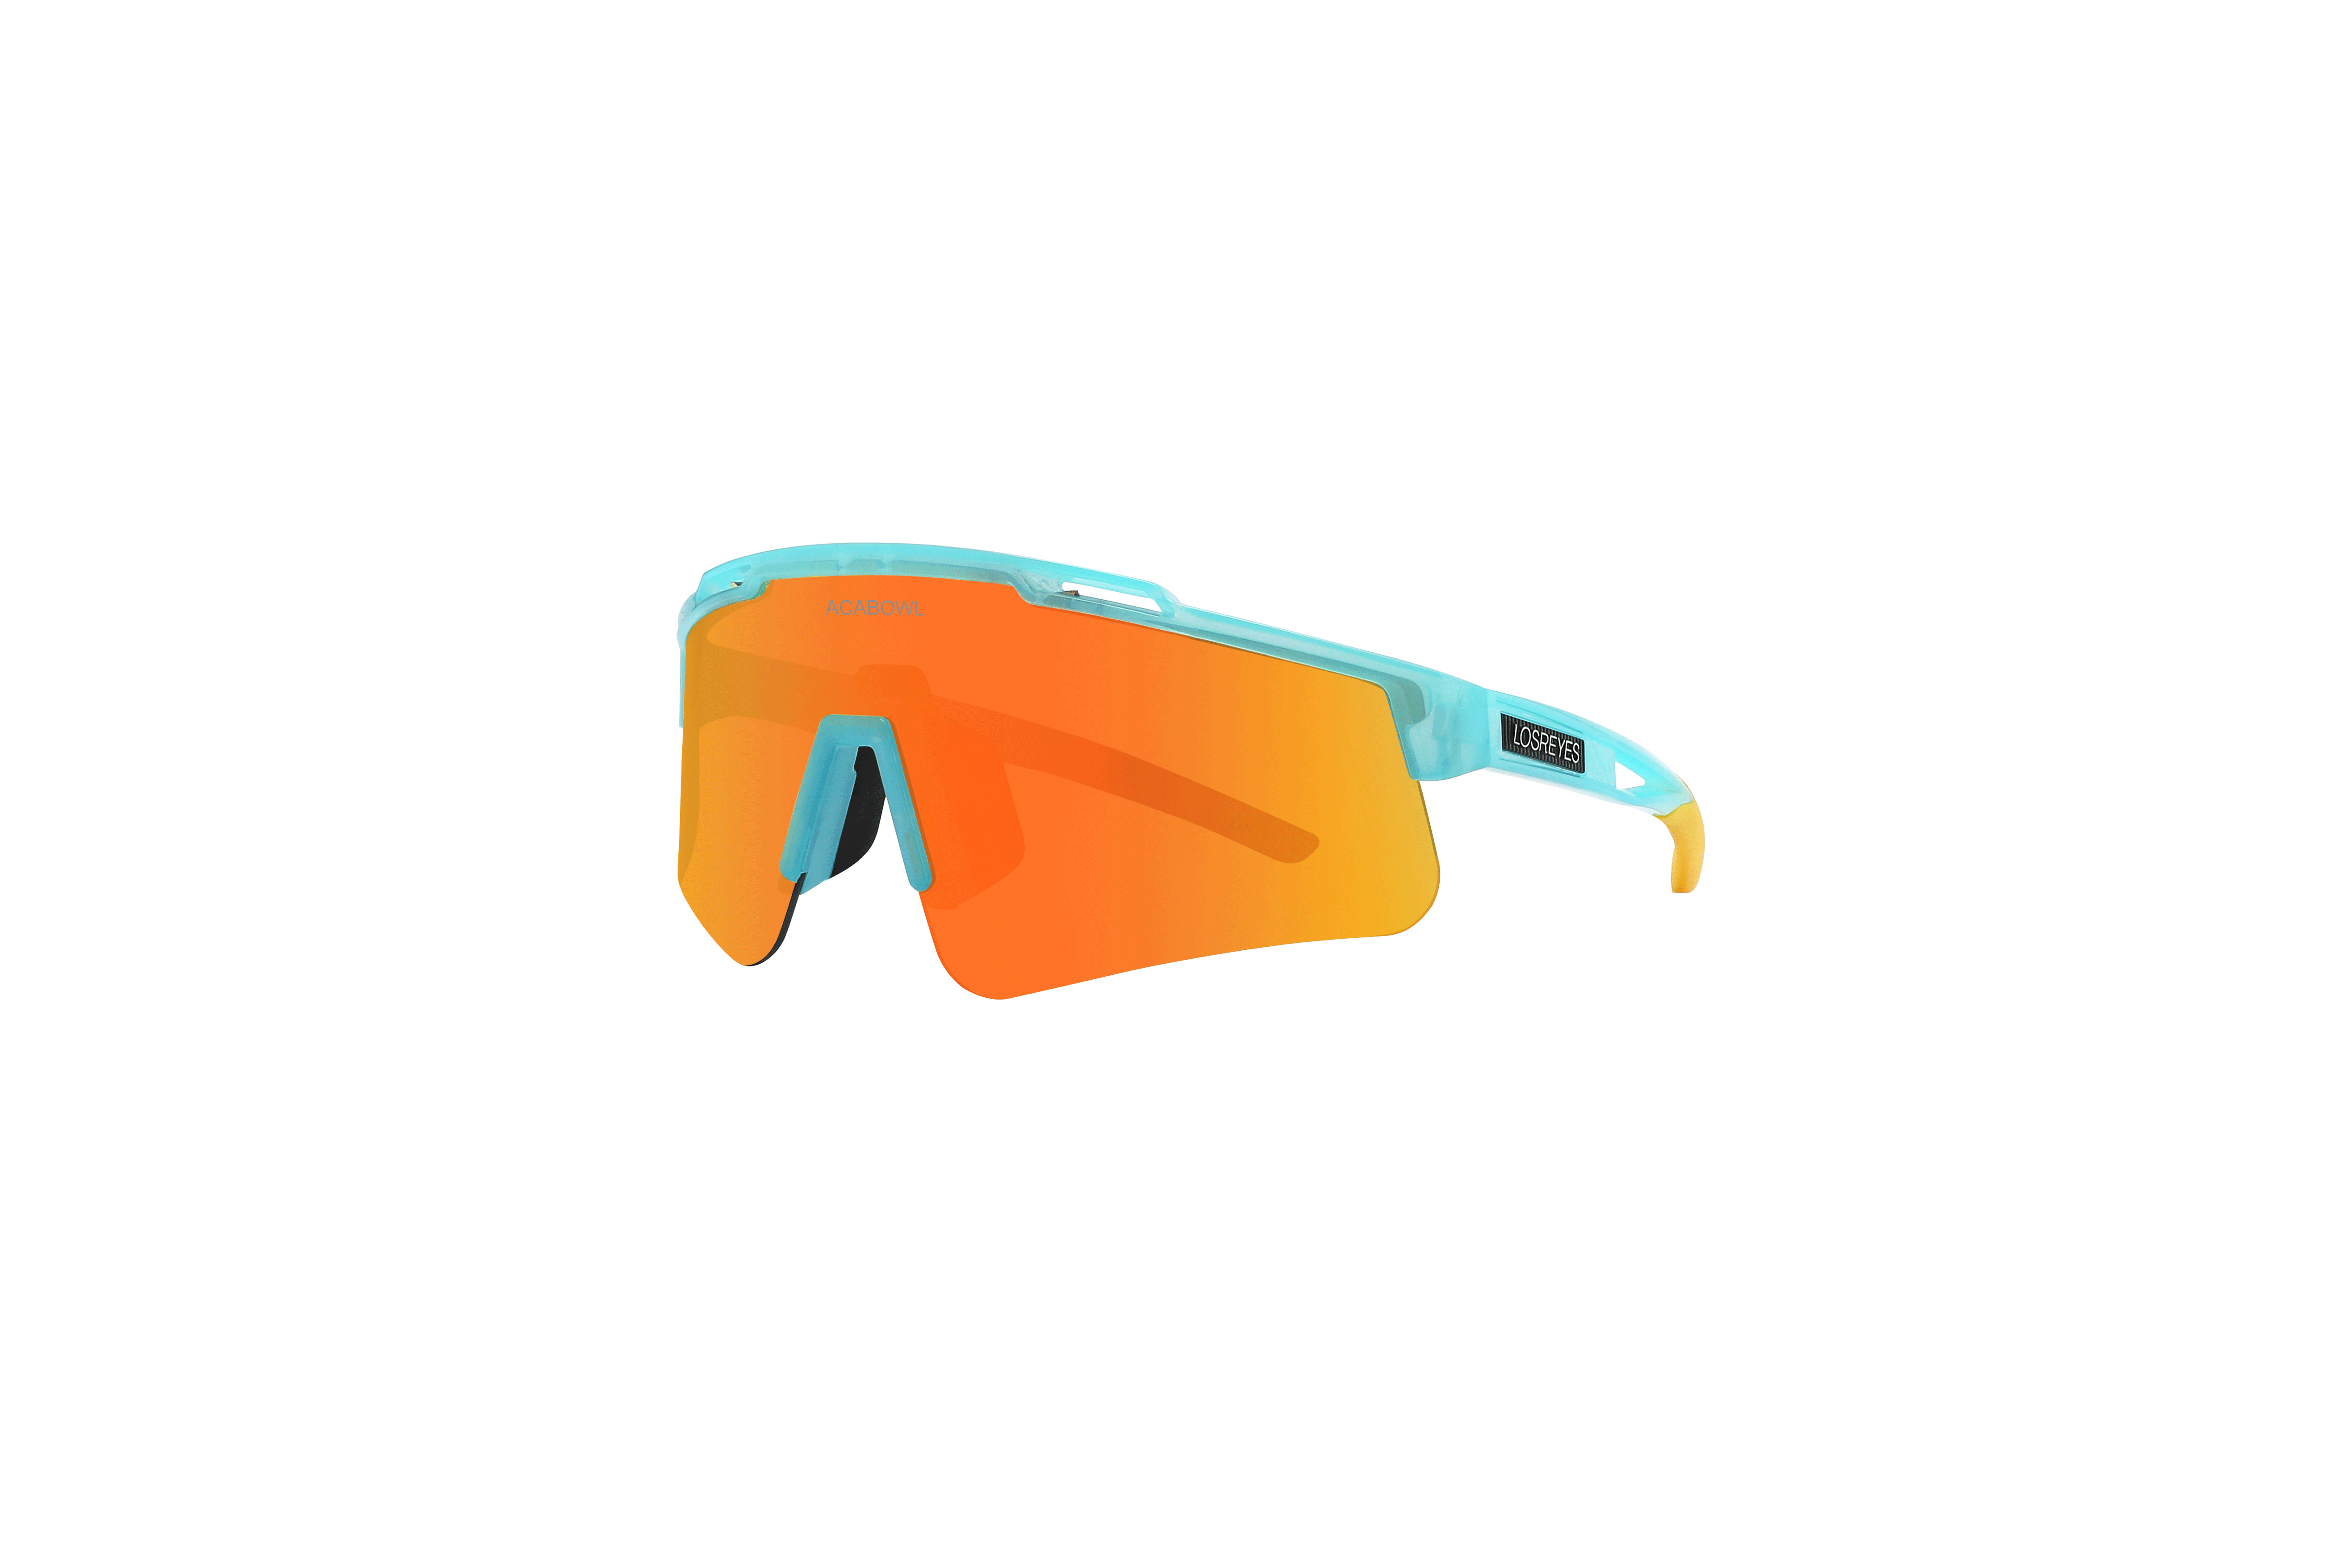 Los Reyes Miami Prime "Aqua/Orange" Sunglasses